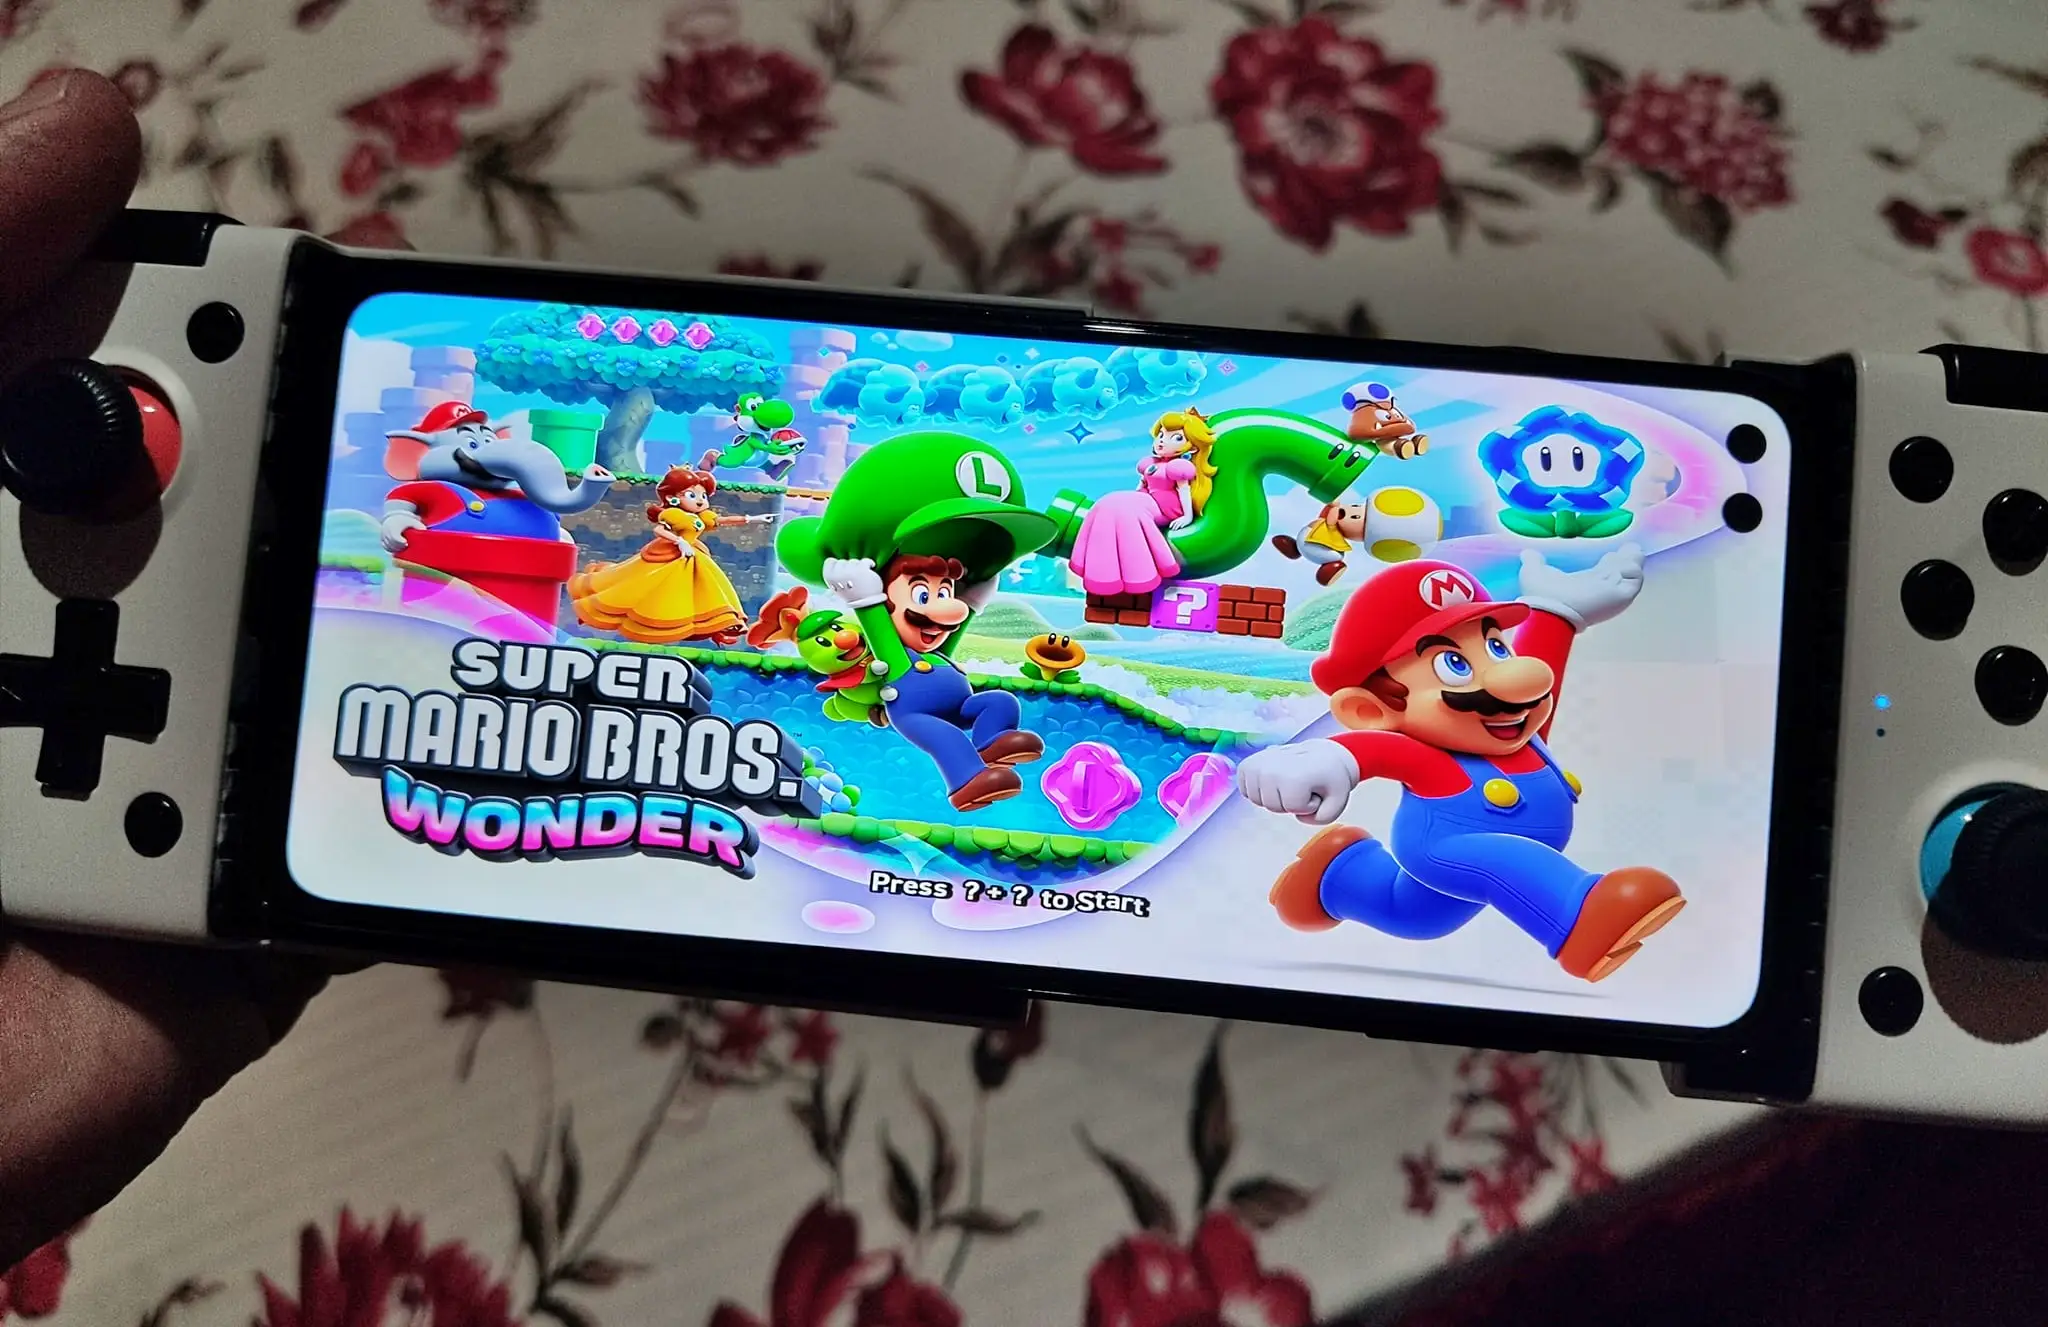 Como Baixar e Jogar Super Mario Bros Wonder no Android 